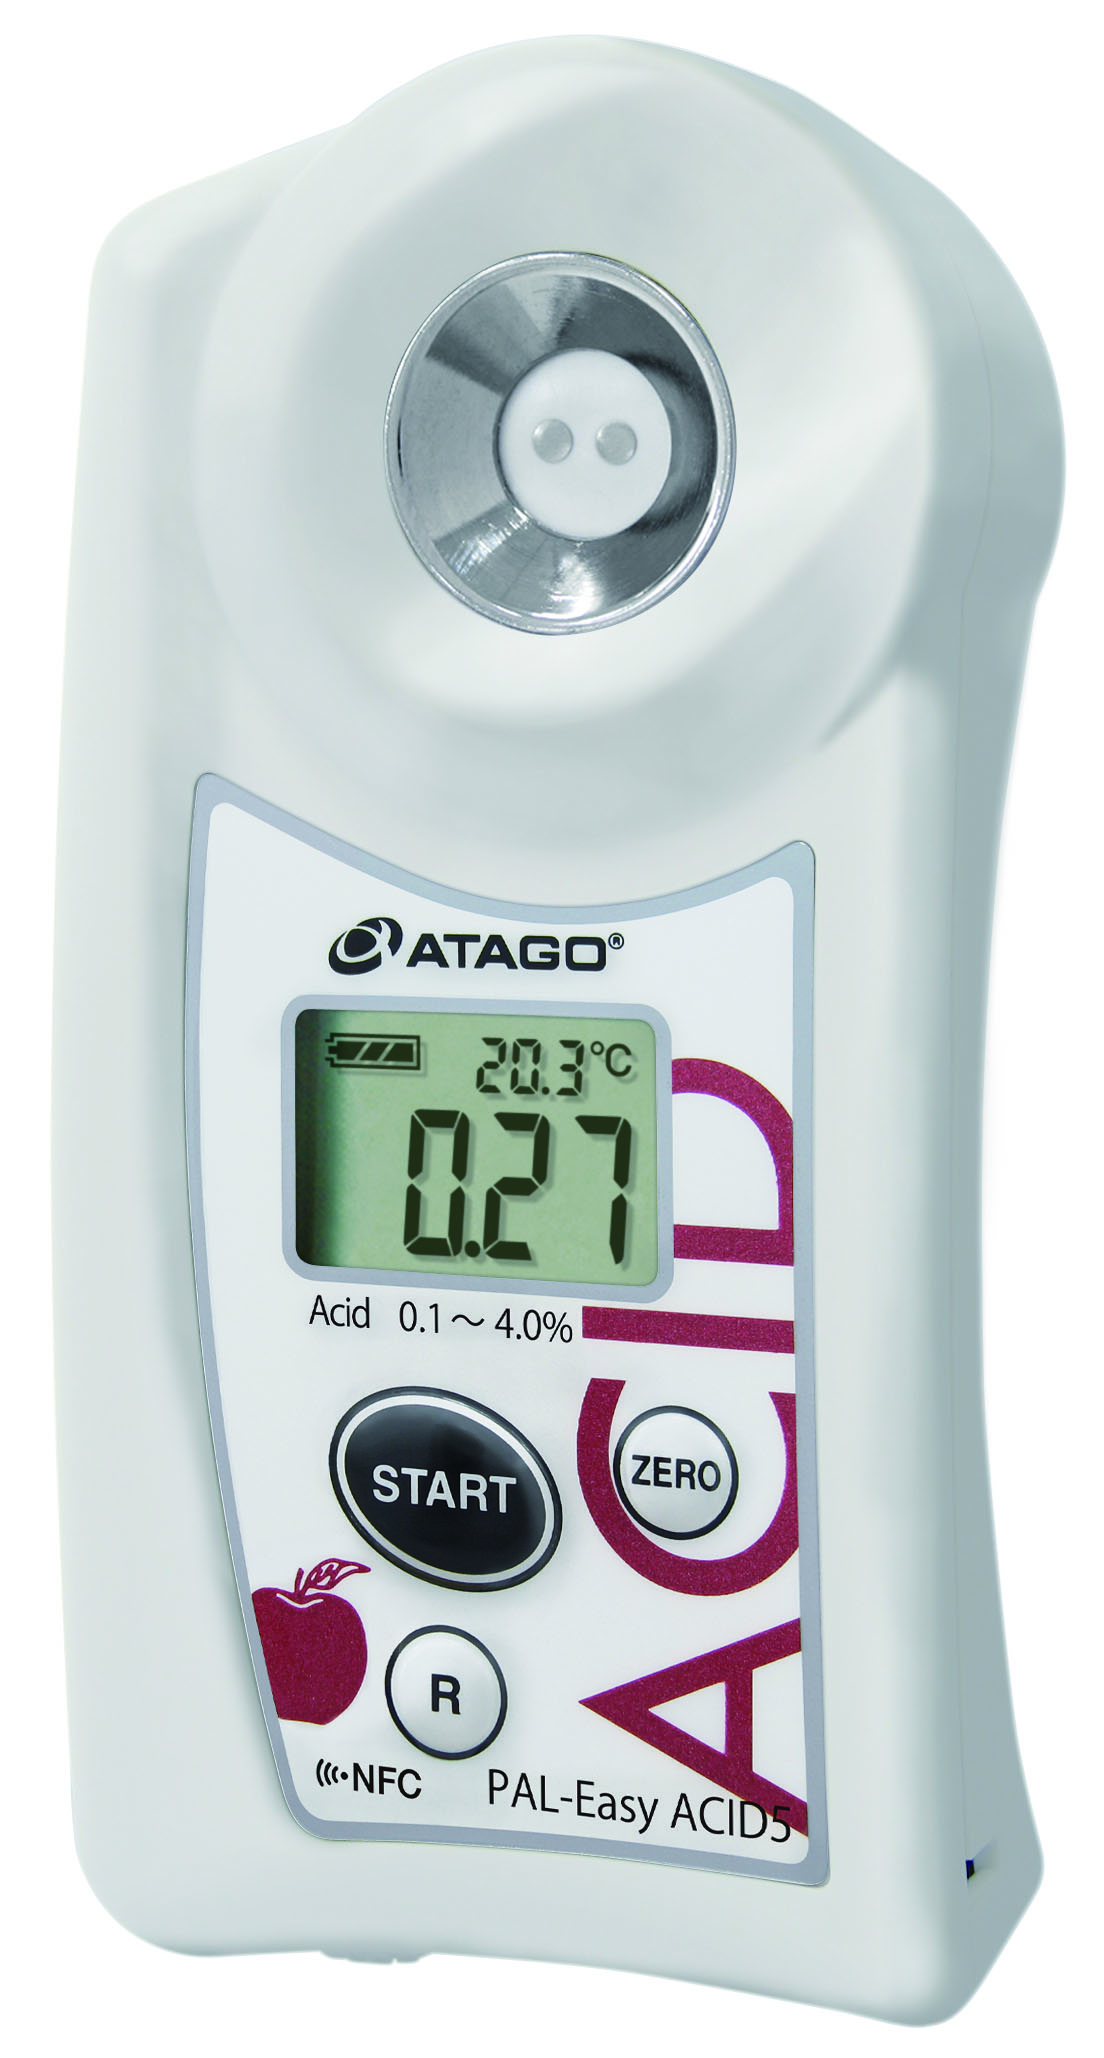 Atago 7305 Pocket Acidity Meter PAL-Easy ACID5 Master Kit for Apple, Acid : 0.10 to 4.00％ Measurement Range